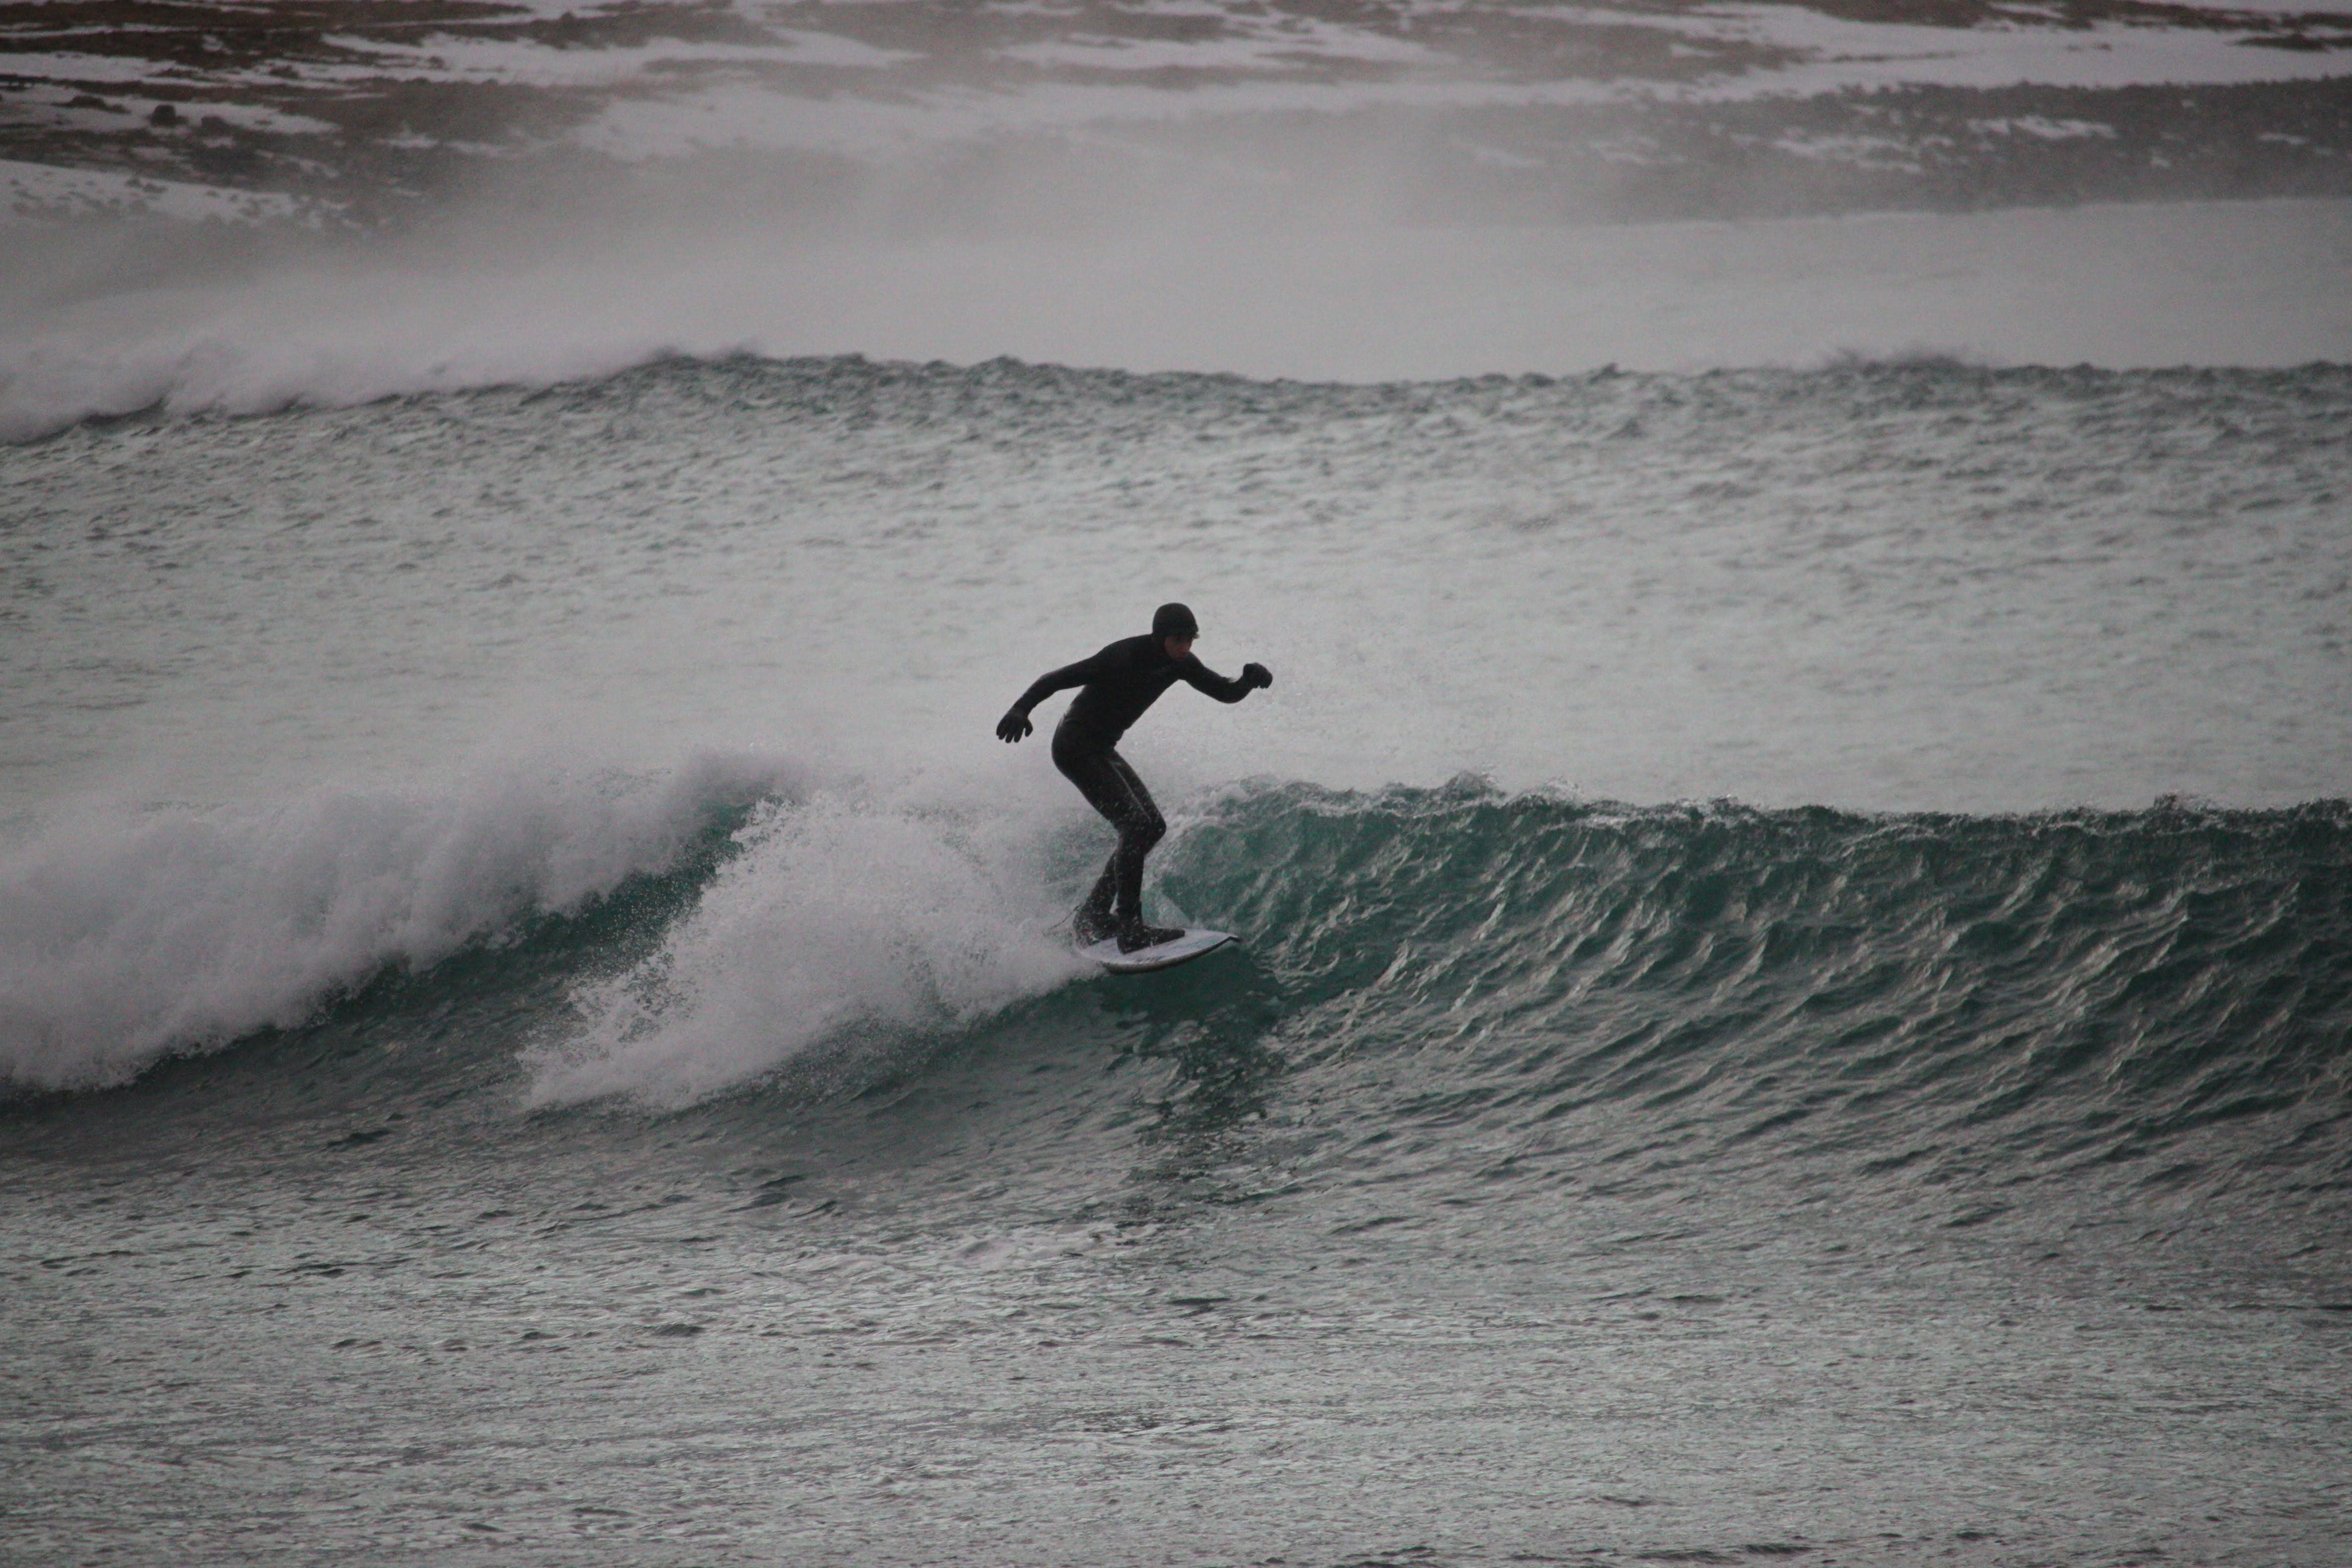 Surfer in a wave in winter using a versatille surfboard